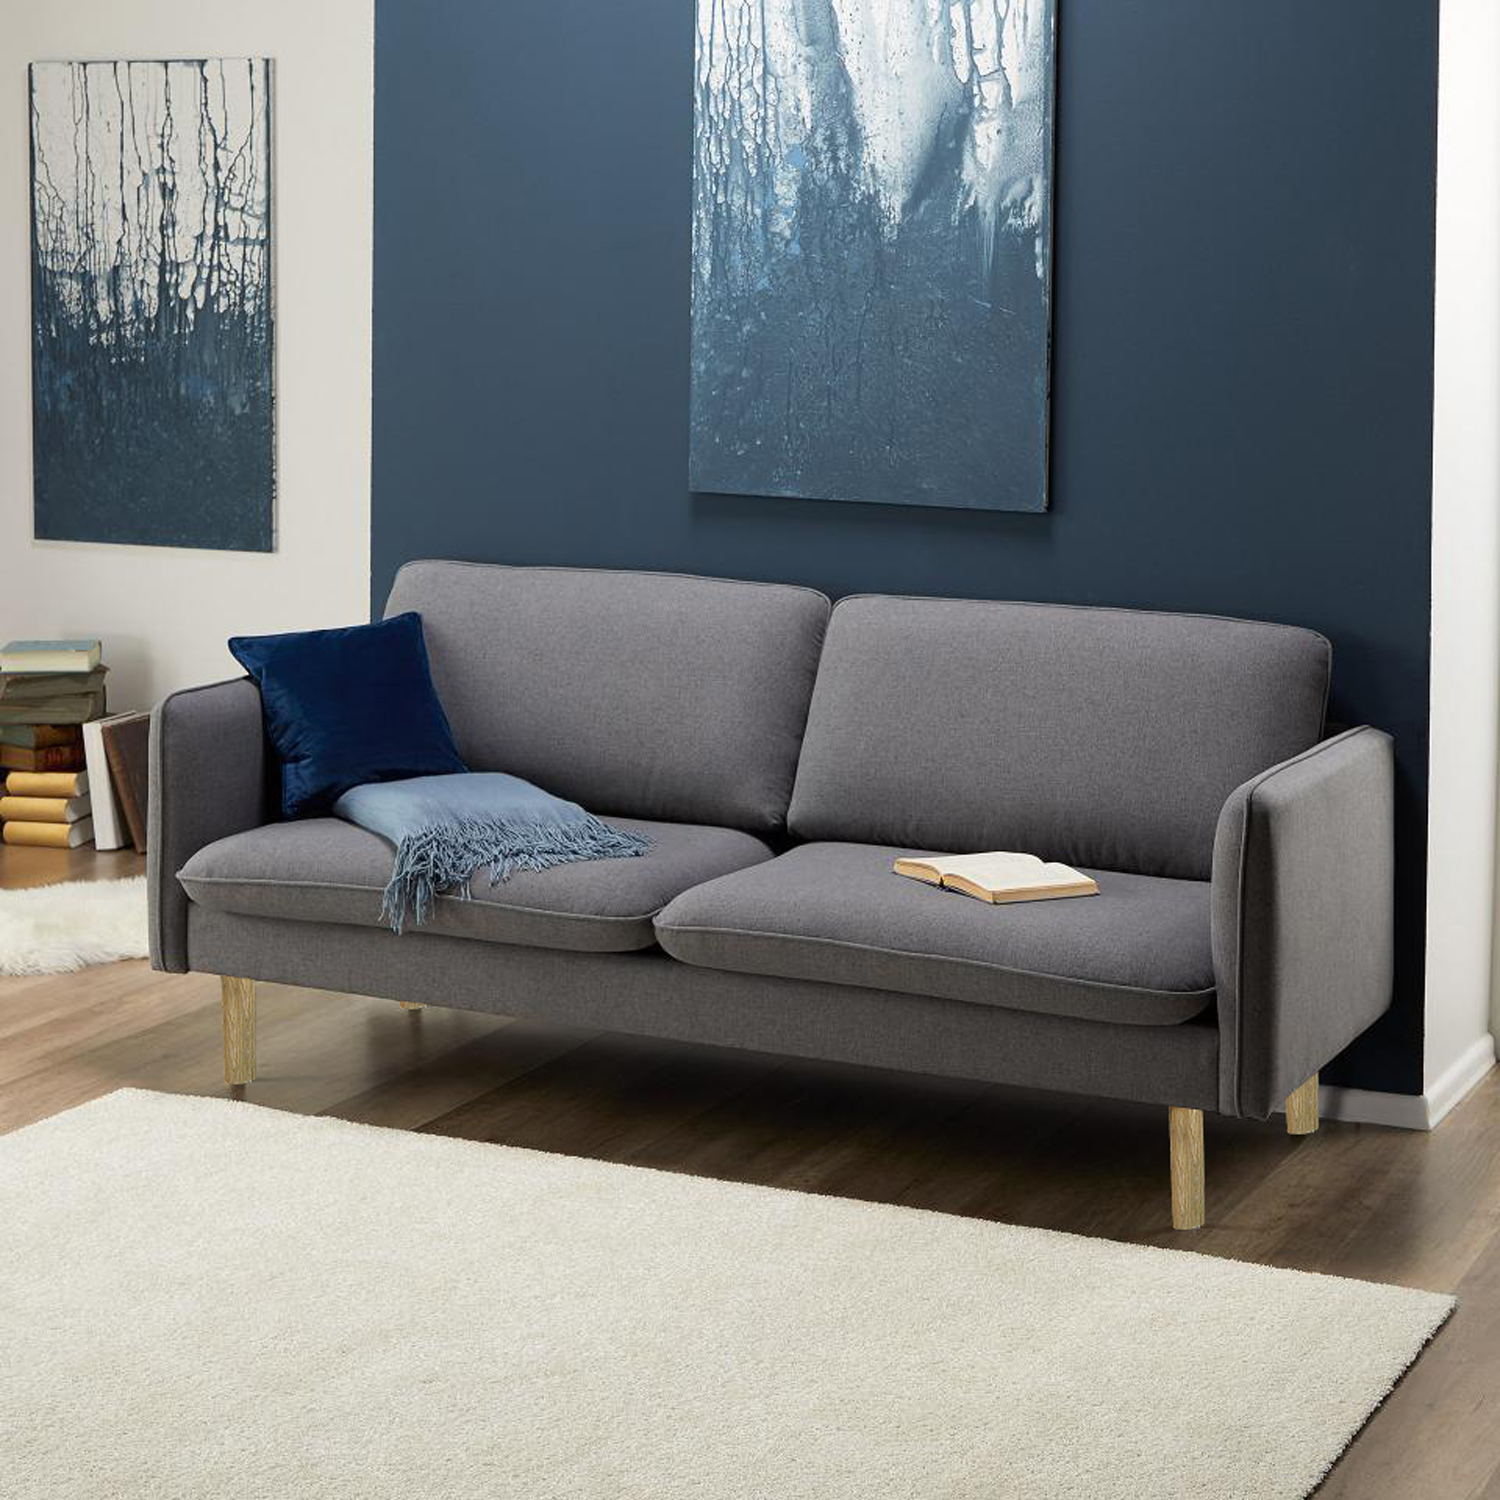 Sofa vải polyester 3s nID-002, ghi đậm, chân gỗ sồi, R205xS82xC83cm